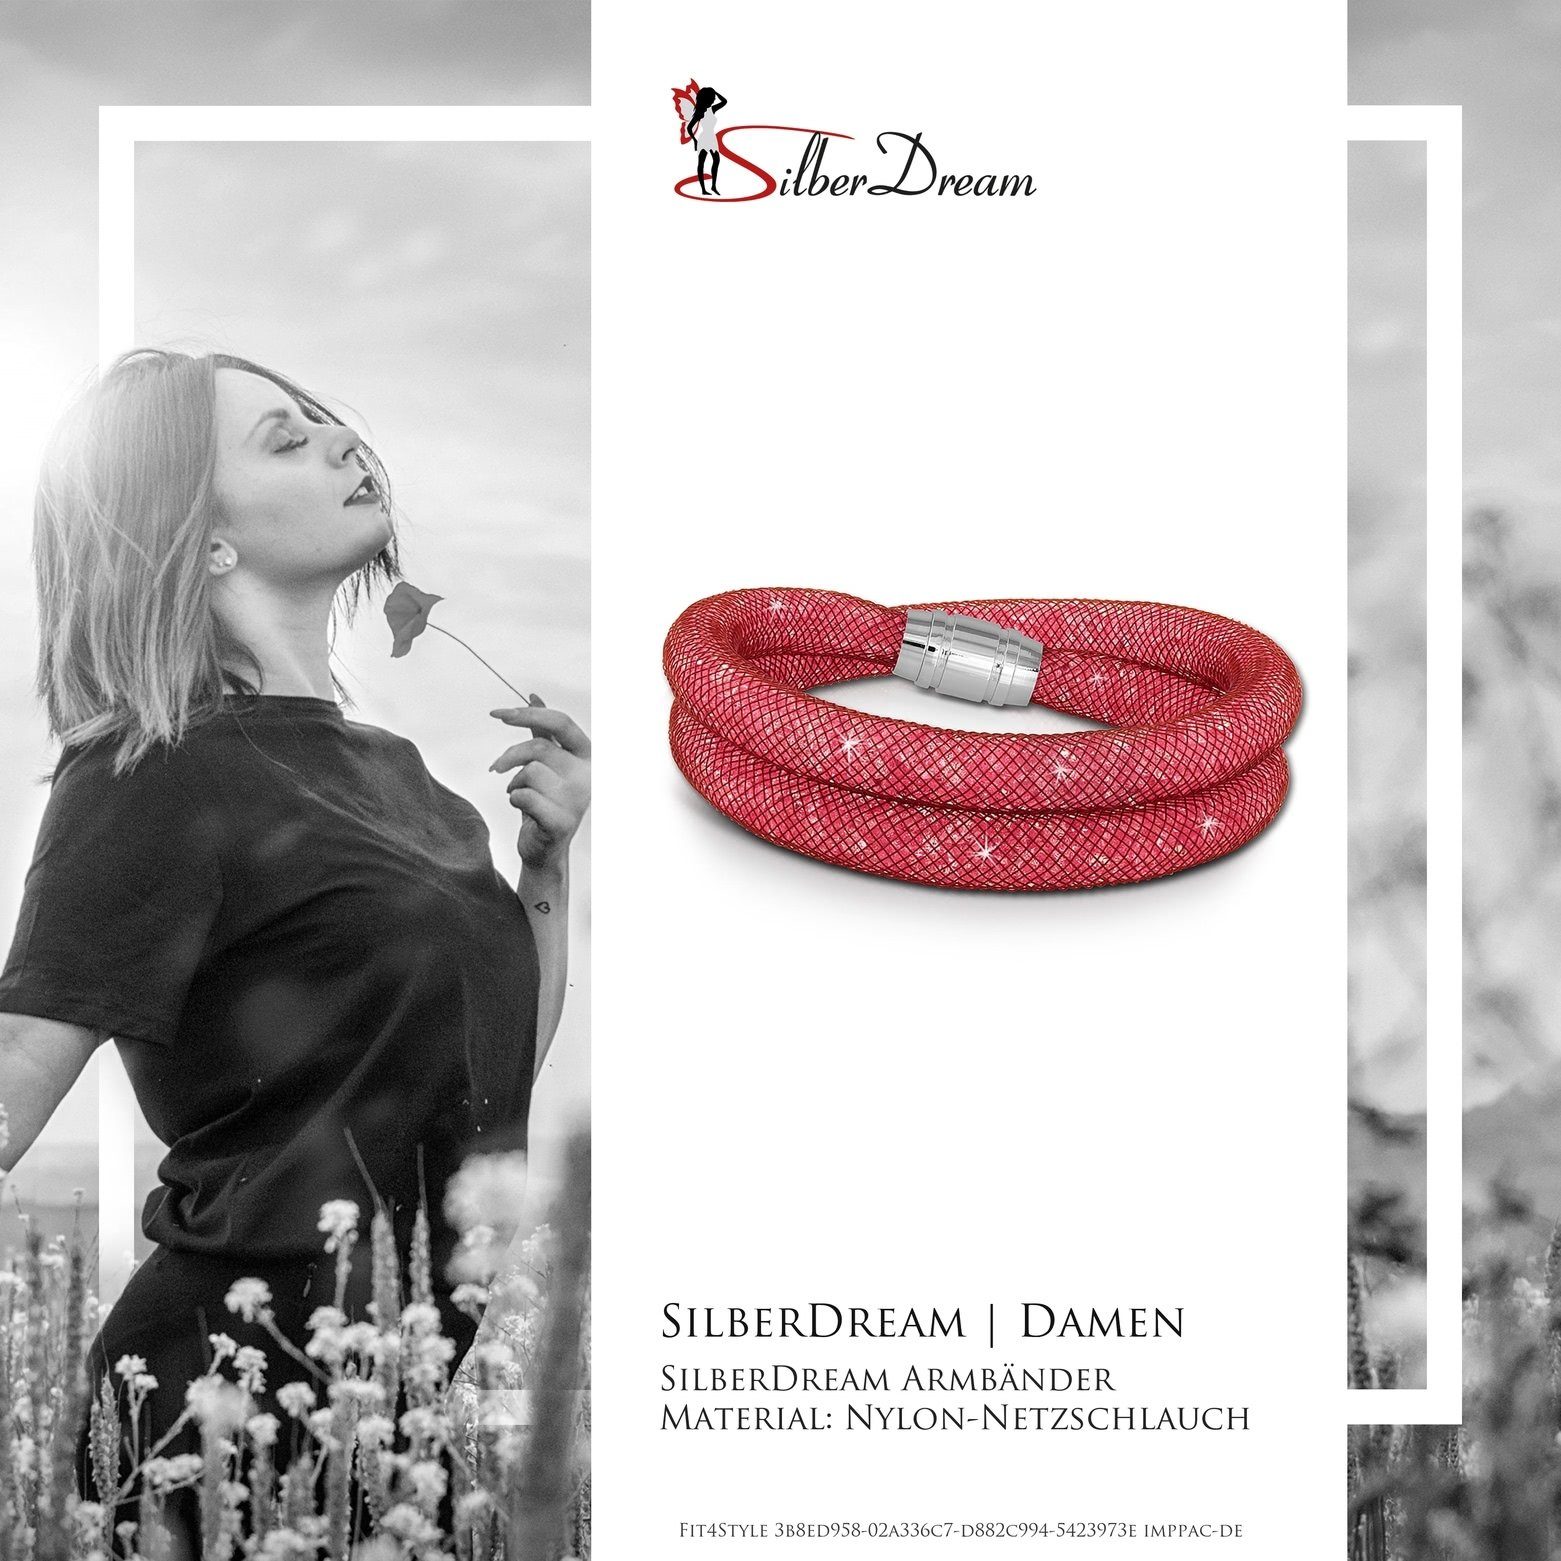 Farbe: SilberDream Damenarmband rosa rot, mit Kristalle (Armband), Edelstahlarmband Edelstahl-Verschluss, SilberDream Arm-Schmuck rosa Armband